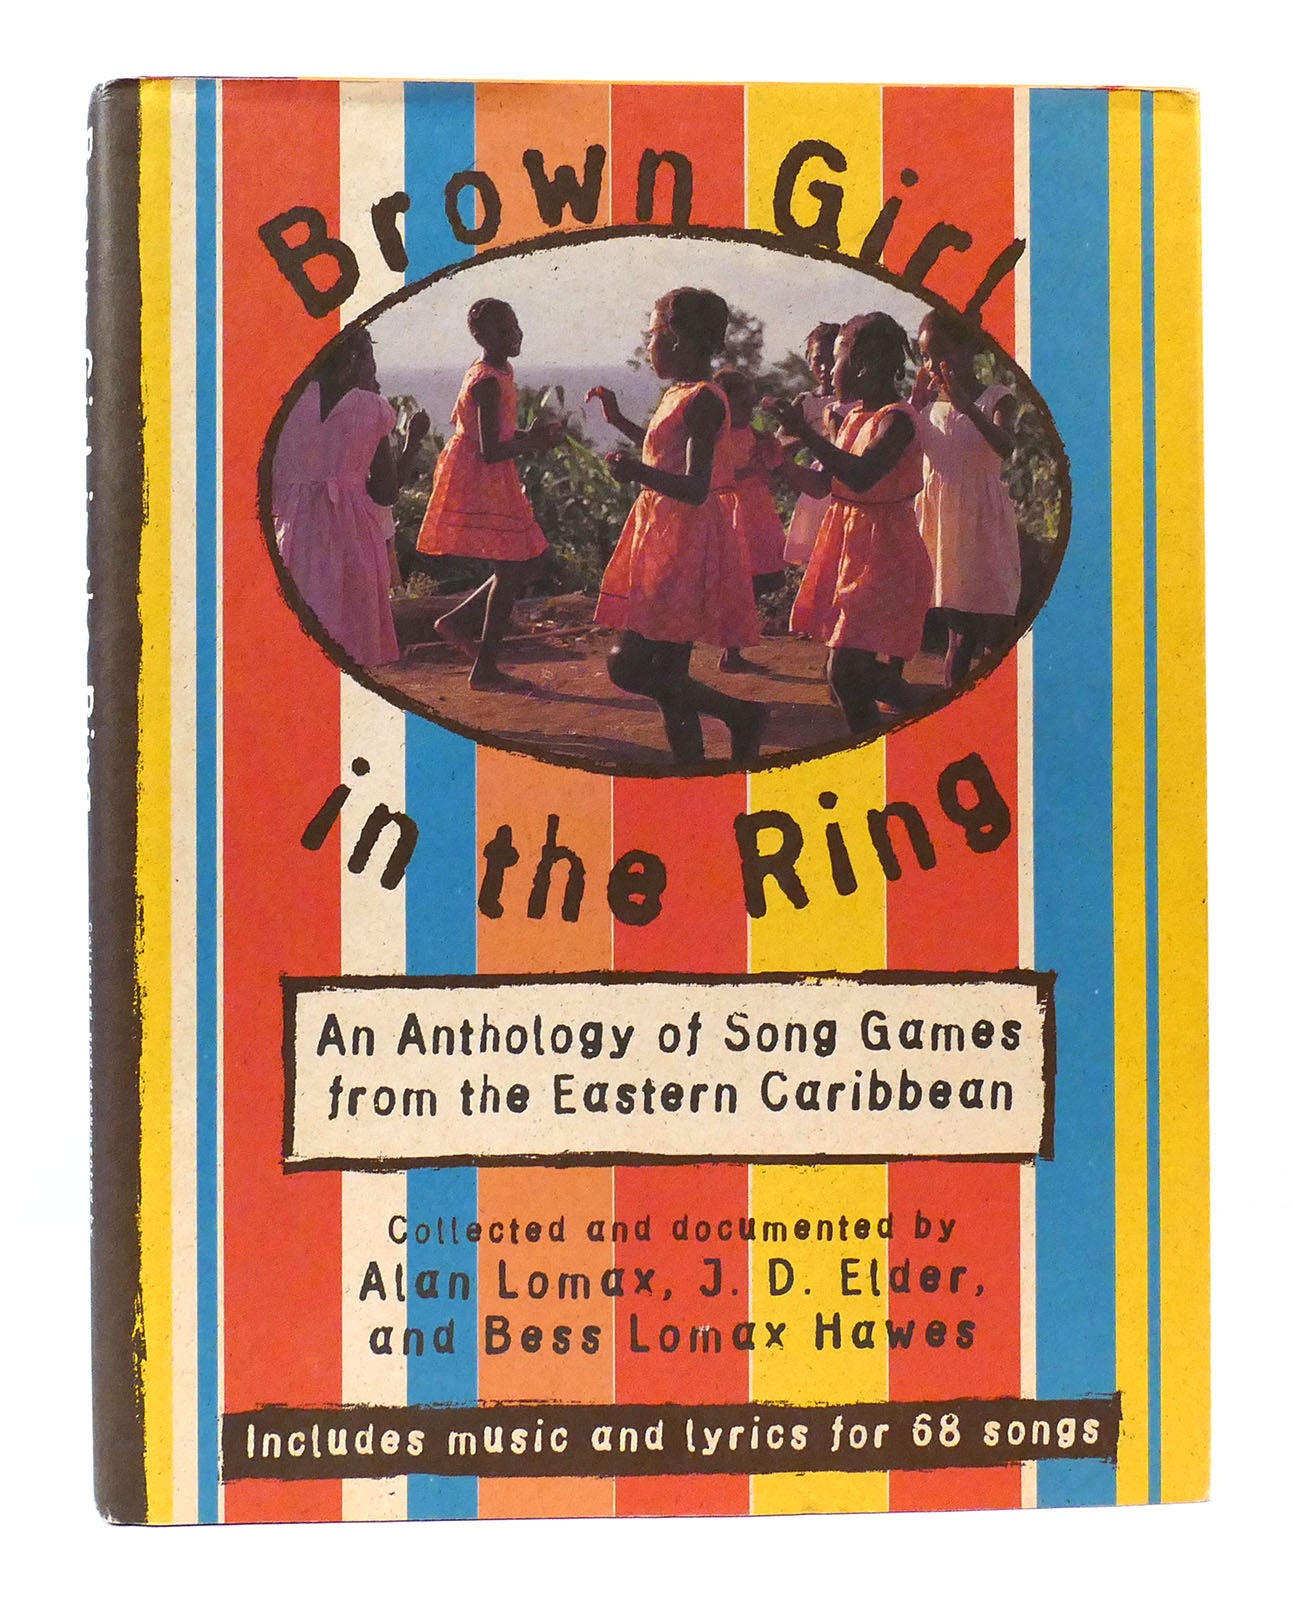 Brown Girl in Ring: World Music Coll / Var : Los Lobos/Mahal/Casey/Rene,  Papillion/Jacobs/Cespedes, Various Artists, Brown Girl in Ring/ World Music  Coll / V, Various Artists: Amazon.in: Books